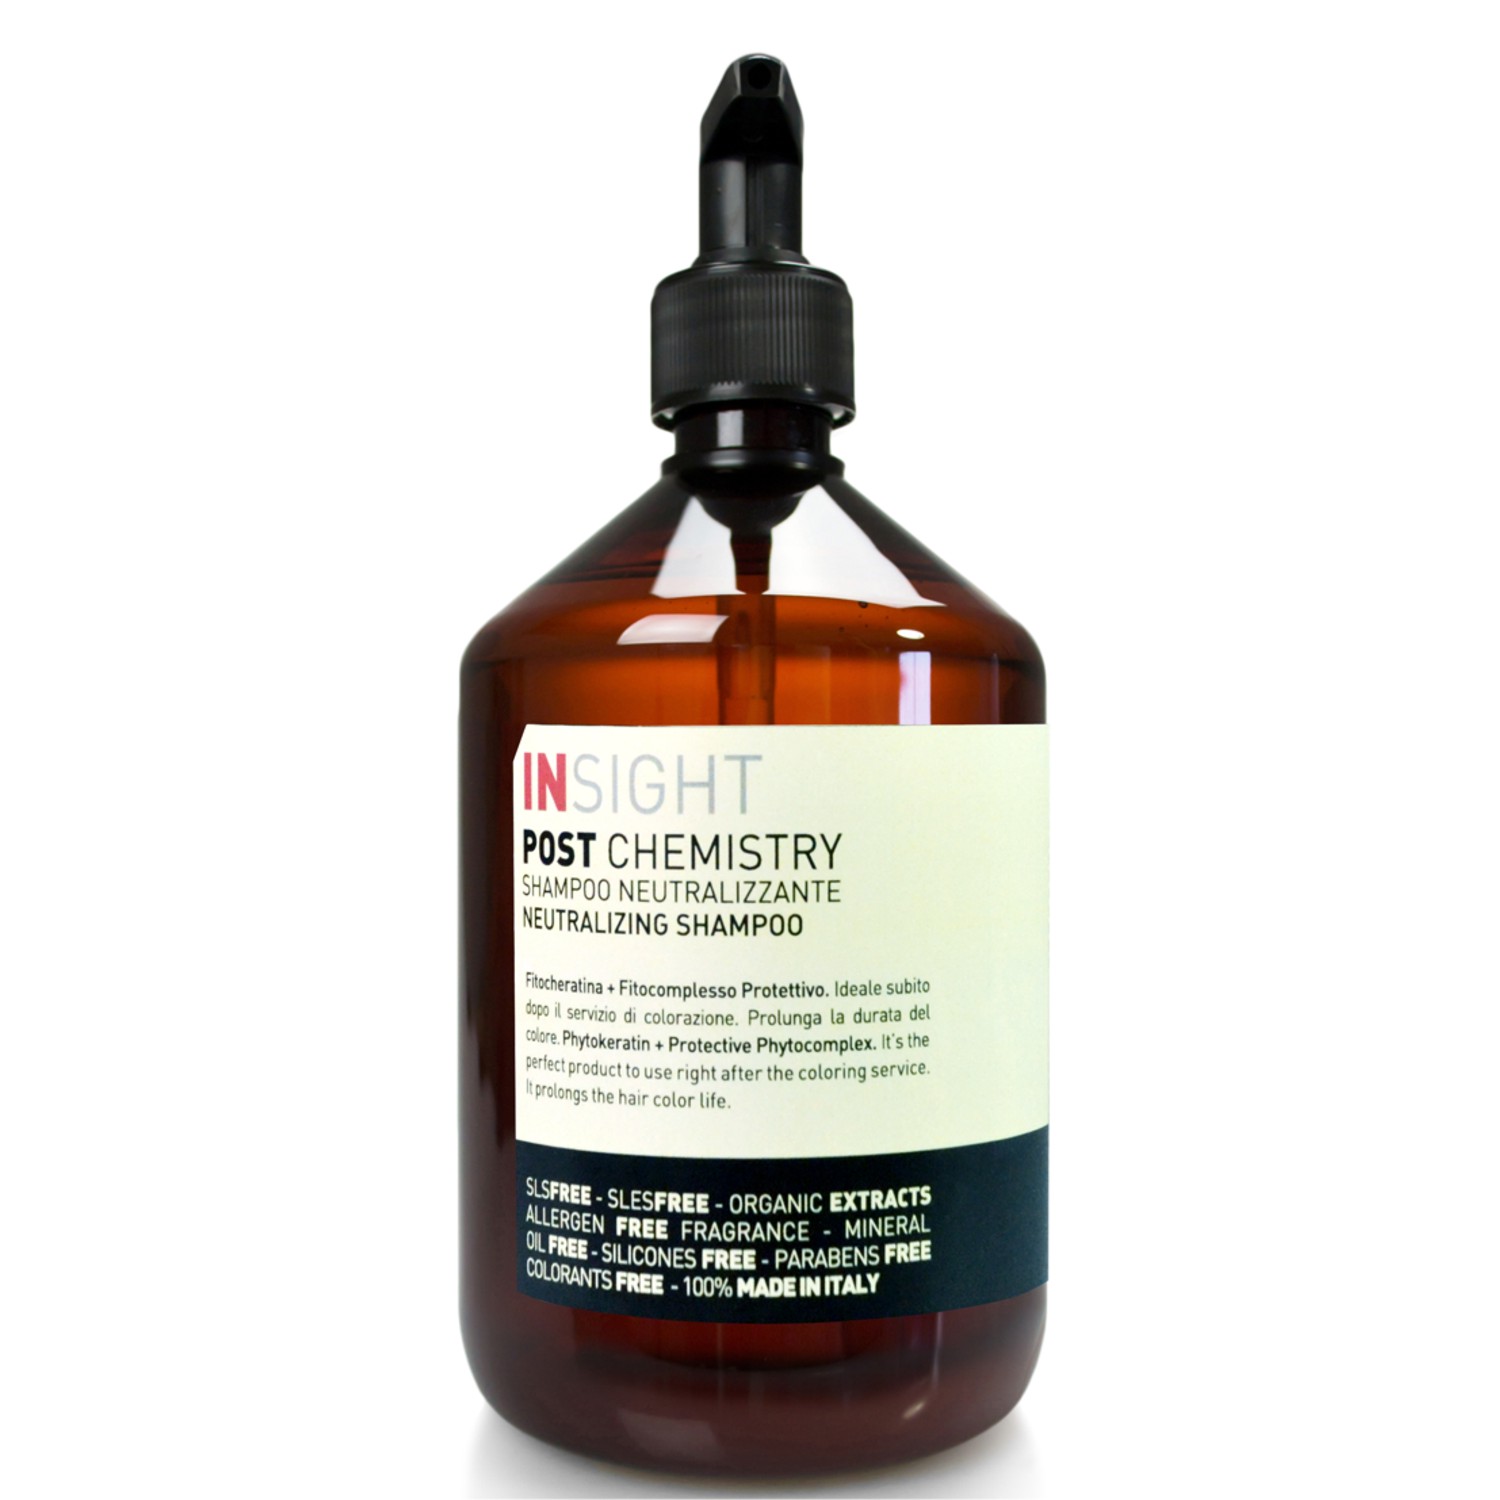 INSIGHT Post Chemistry Neutralizing Shampoo 900 ml